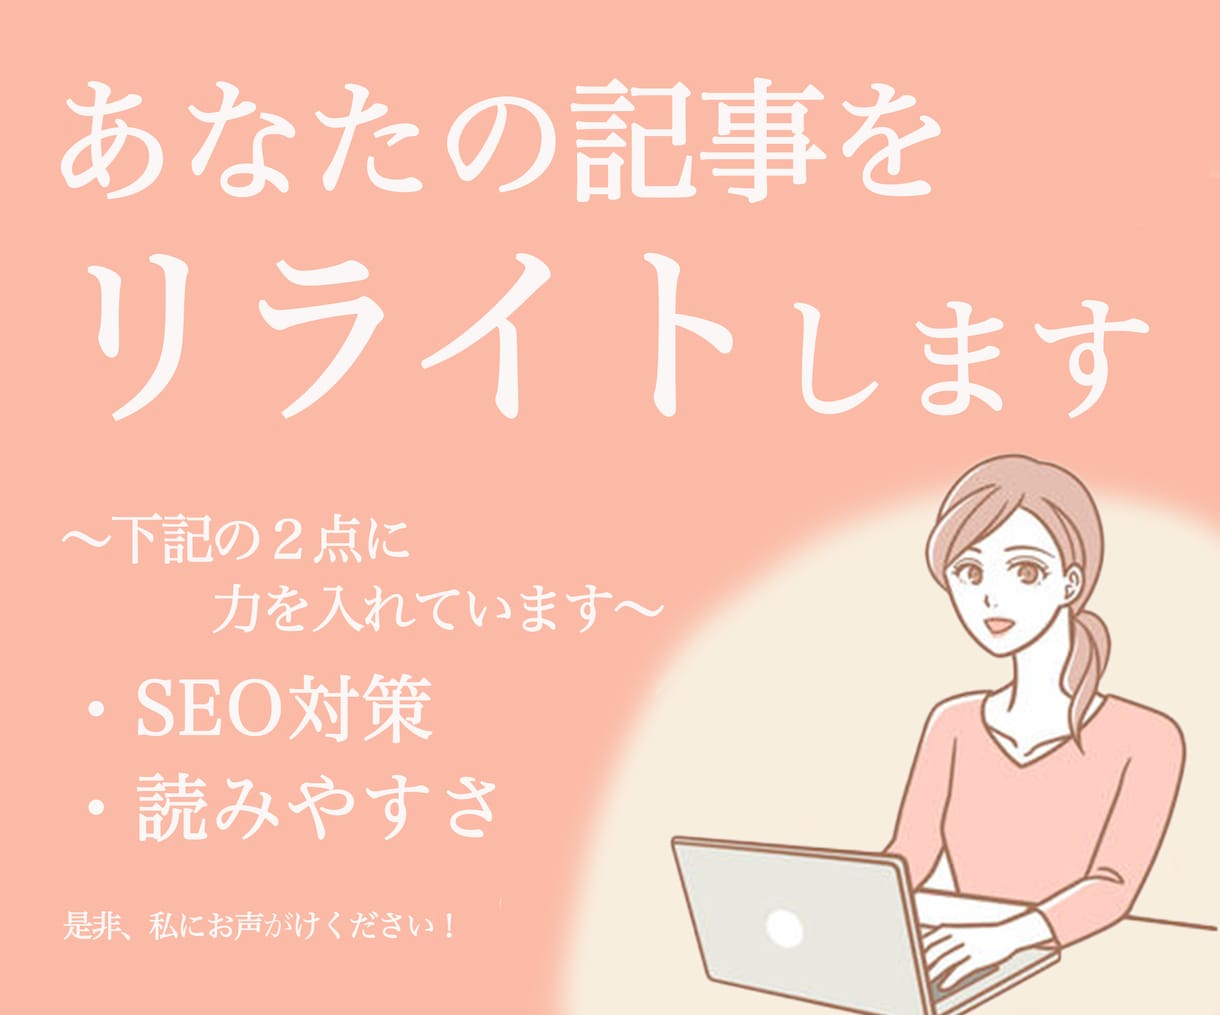 💬Coconara｜Rewrite 10 articles with SEO measures SERINA web writer 4.9…